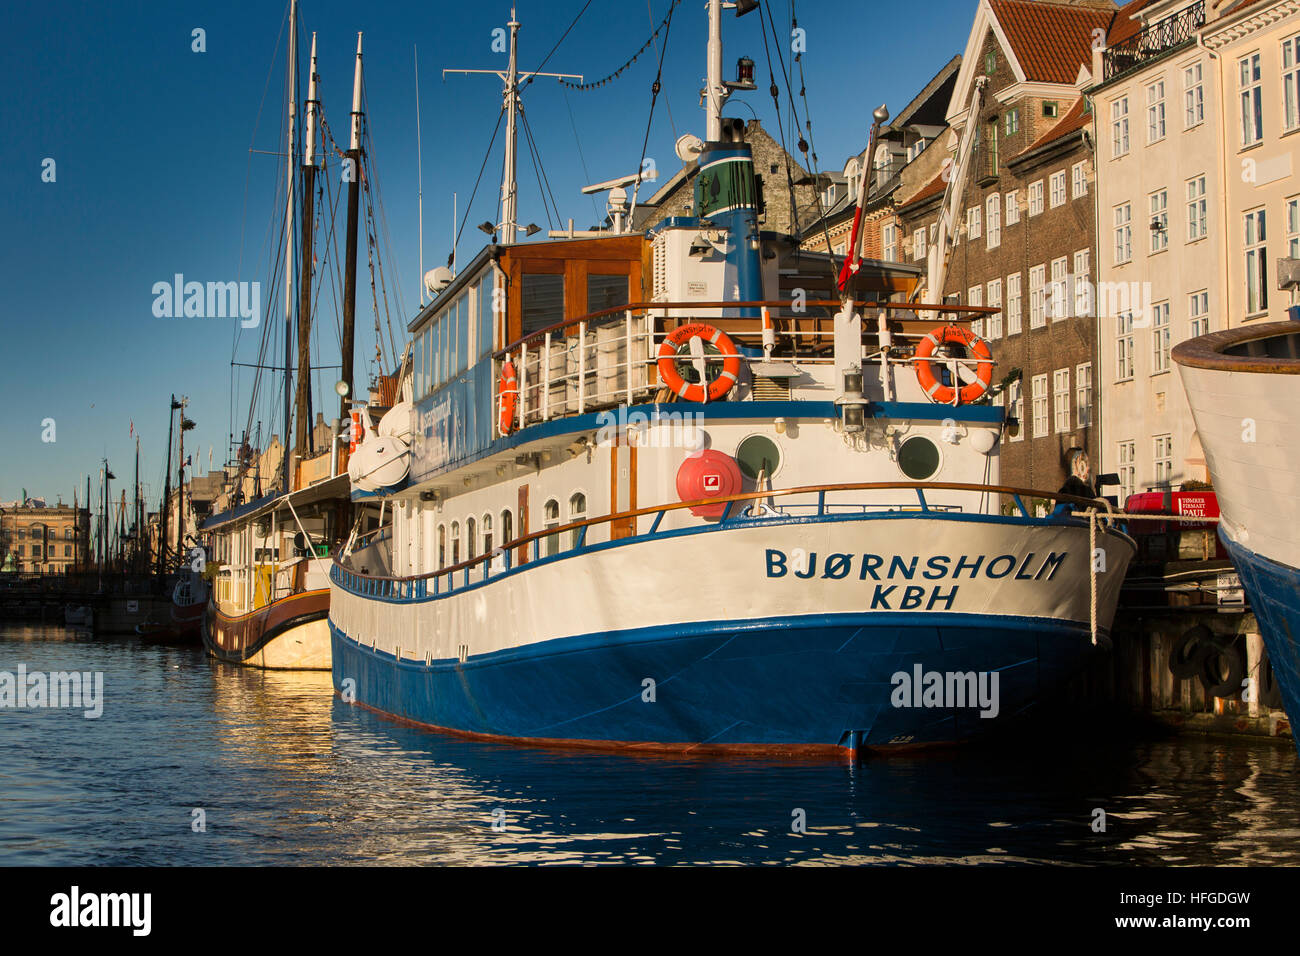 Danimarca Copenhagen Nyhavn, MS Bjornsholm, 1916 costruito passeggero vintage barca ormeggiata in banchina Foto Stock